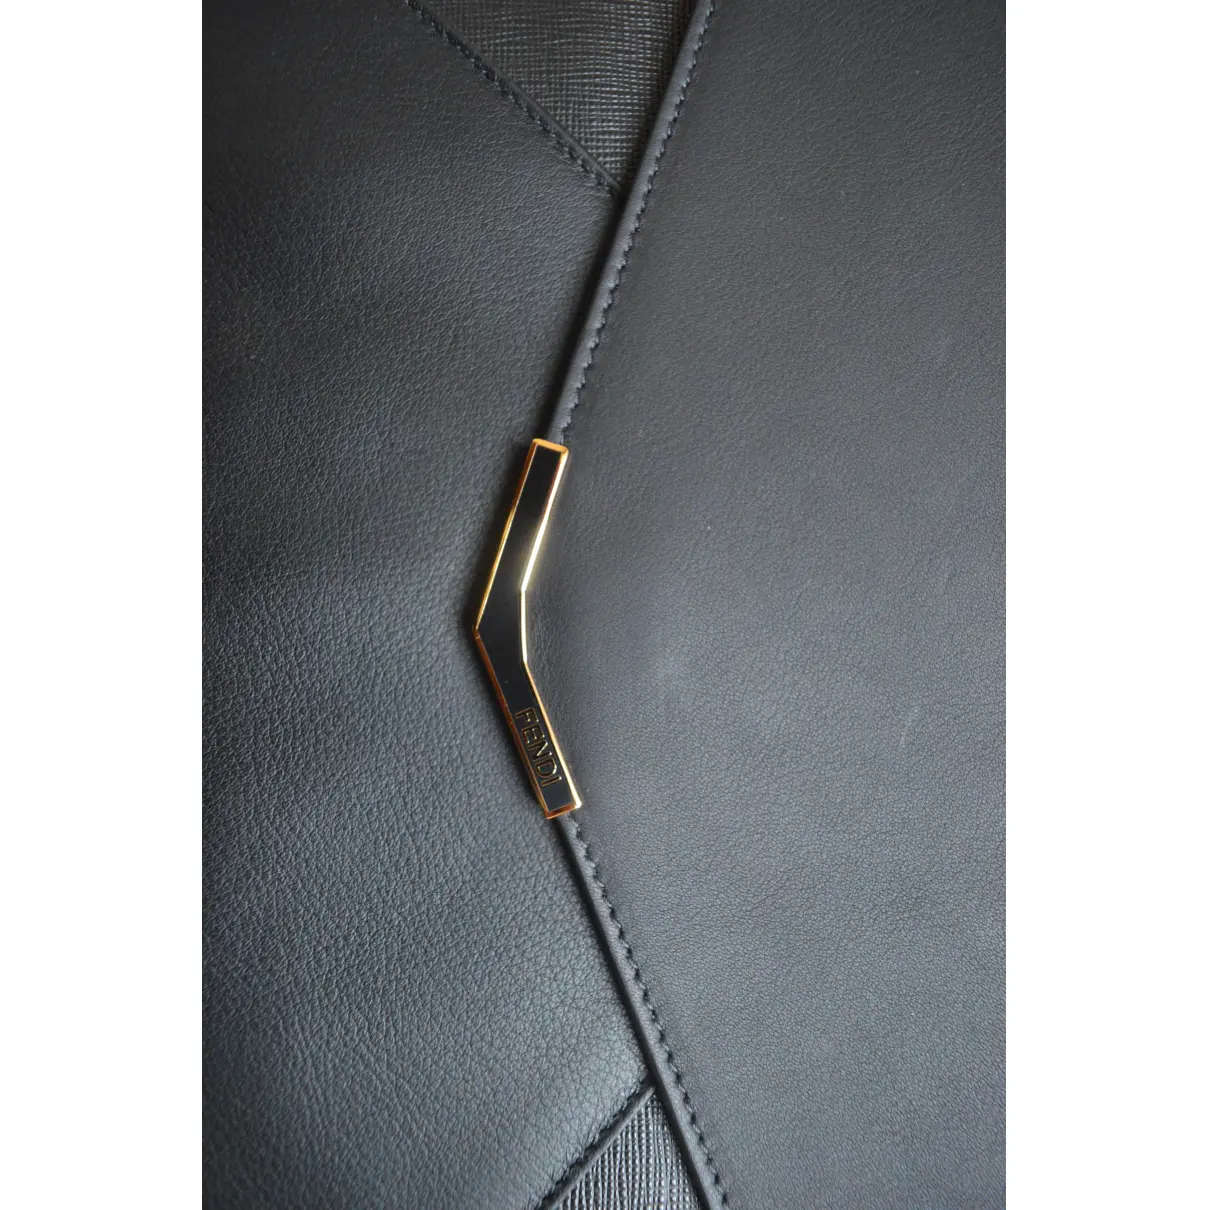 Buy Fendi 2Jours leather clutch bag online